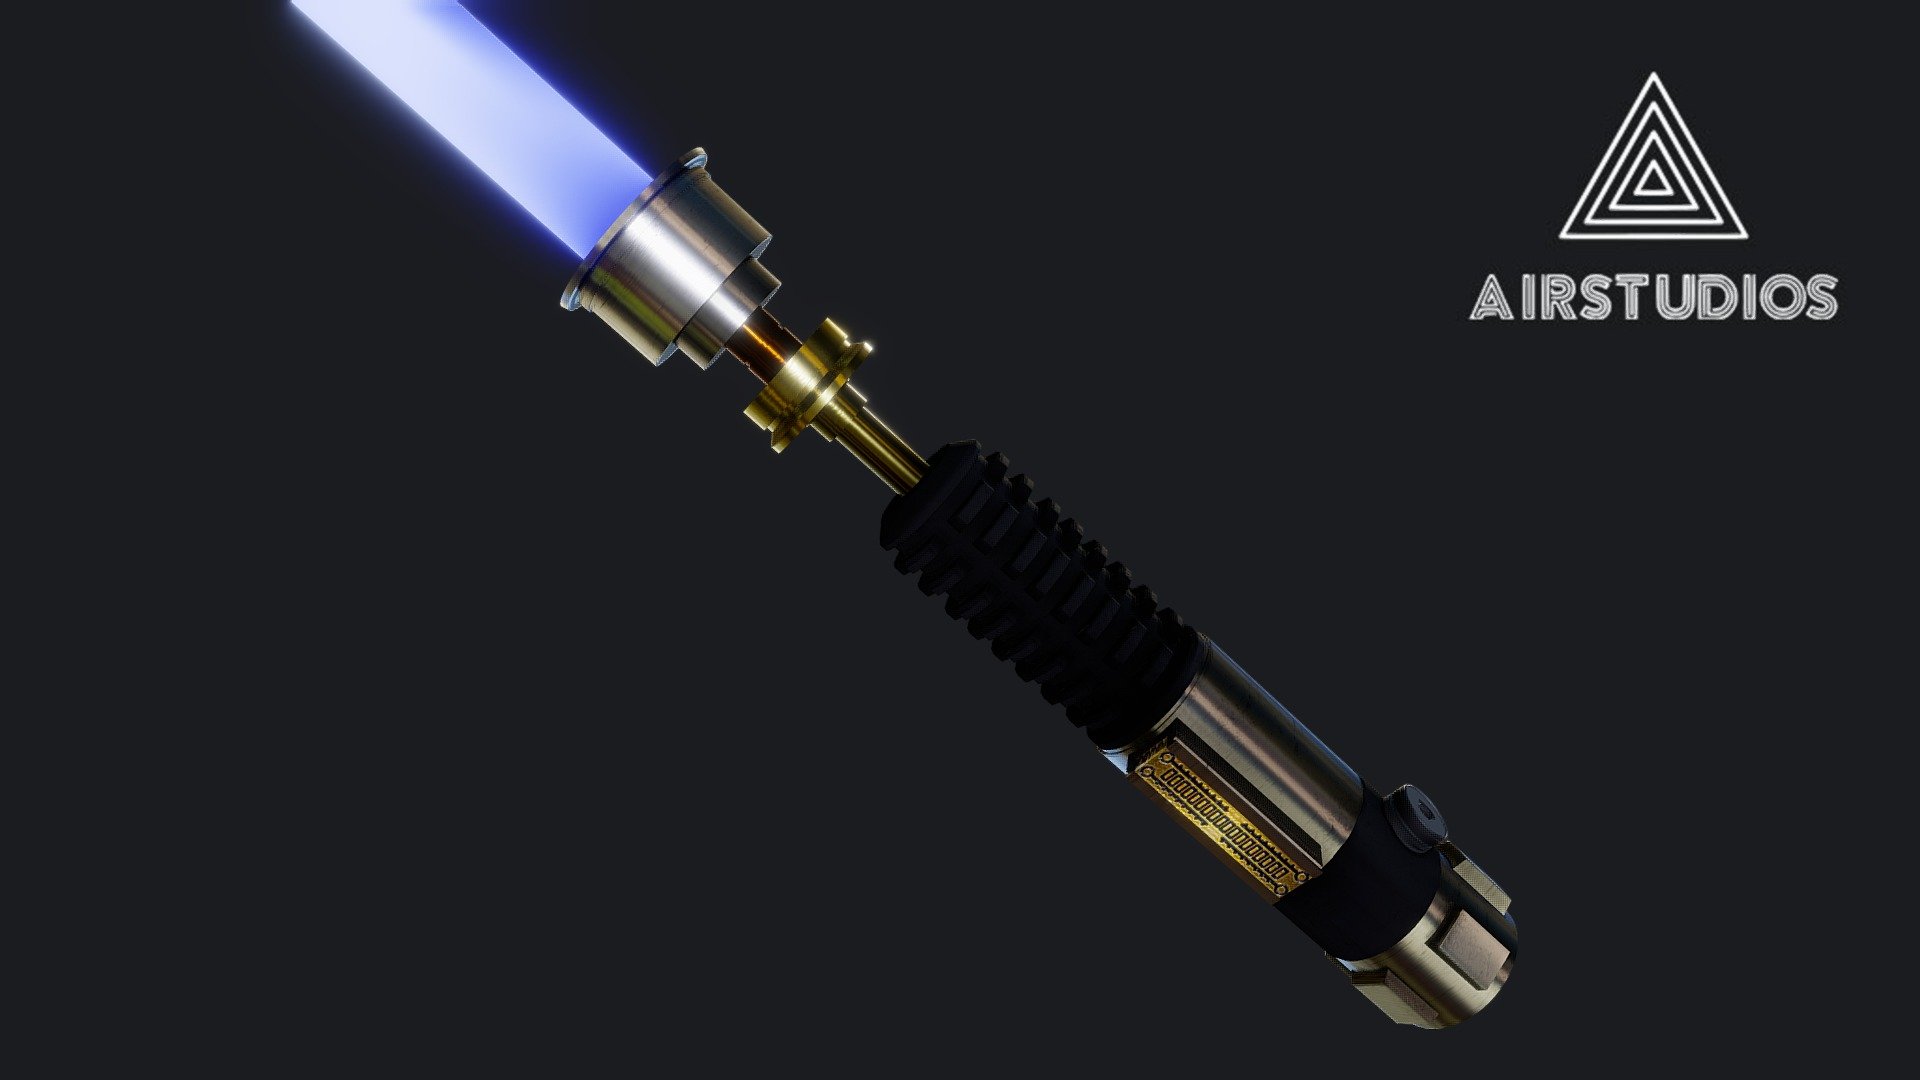 Obi Wan LightSaber
Made in Maya - Obi Wan LightSaber - Buy Royalty Free 3D model by AirStudios (@sebbe613) 3d model